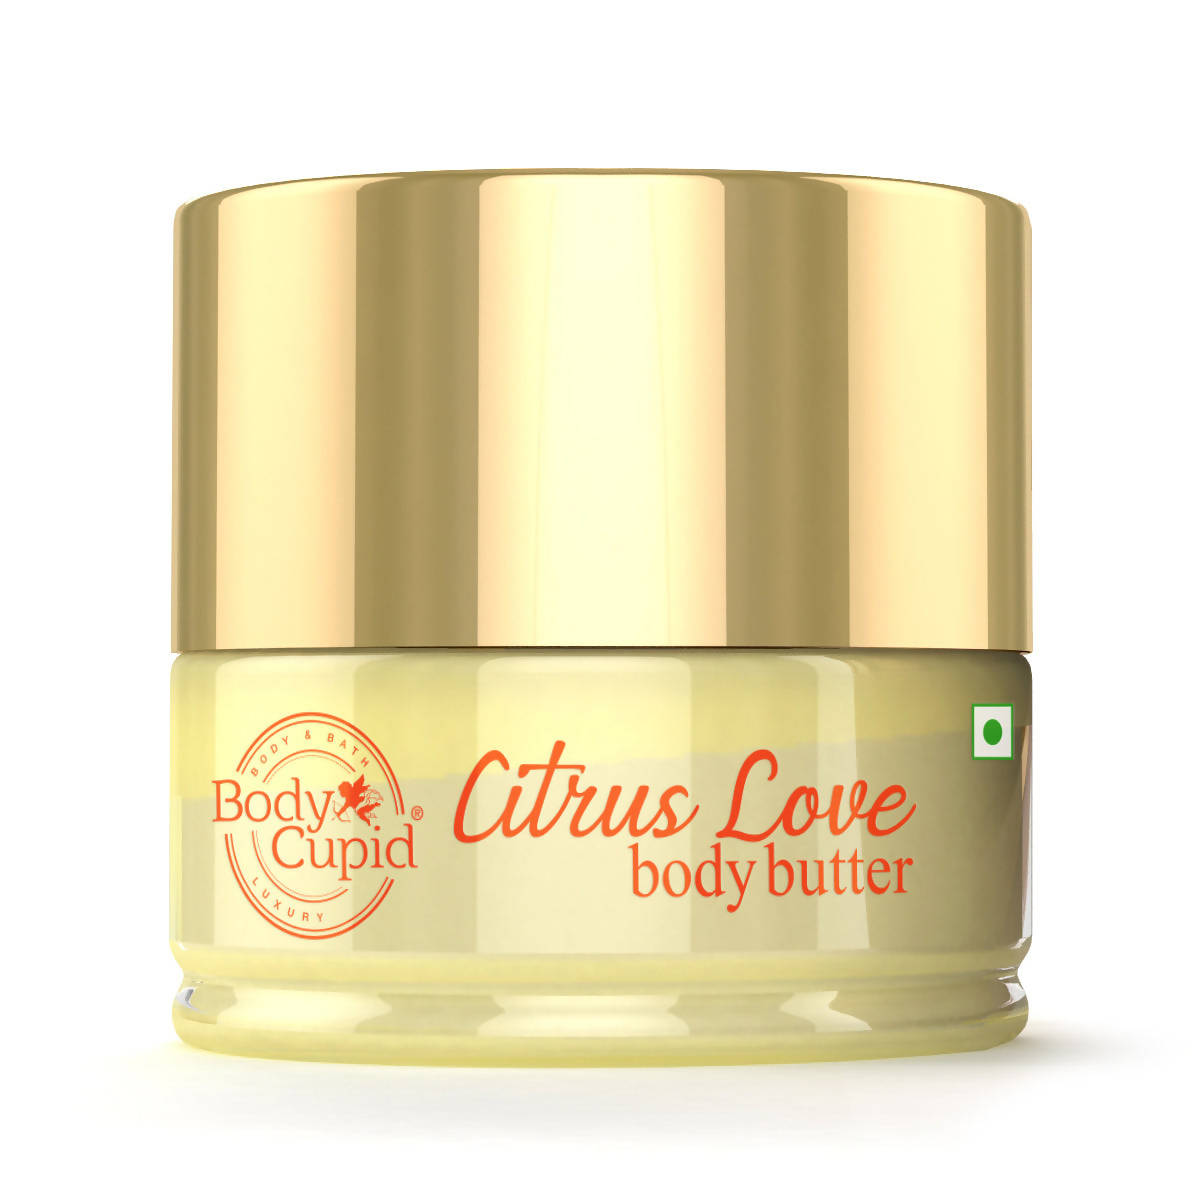 Body Cupid Citrus Love Body Butter